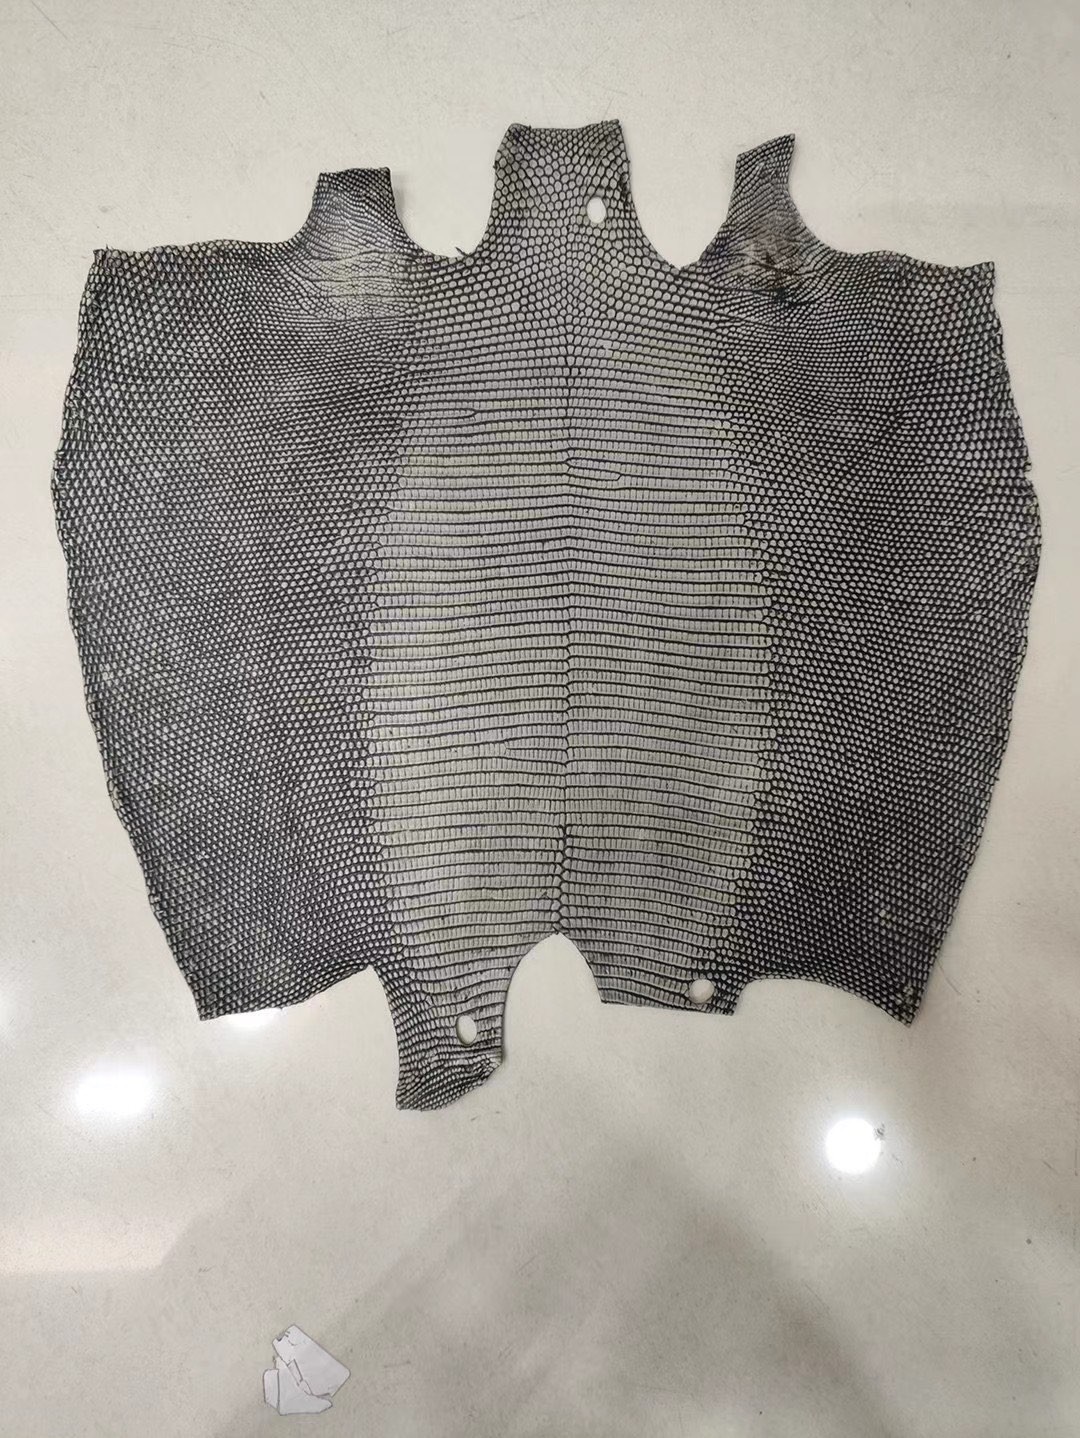 Shebag New comming Hermes bag leathers（2023 Week 51）-Paras laatu väärennetty Louis Vuitton laukku verkkokauppa, replika suunnittelija laukku ru